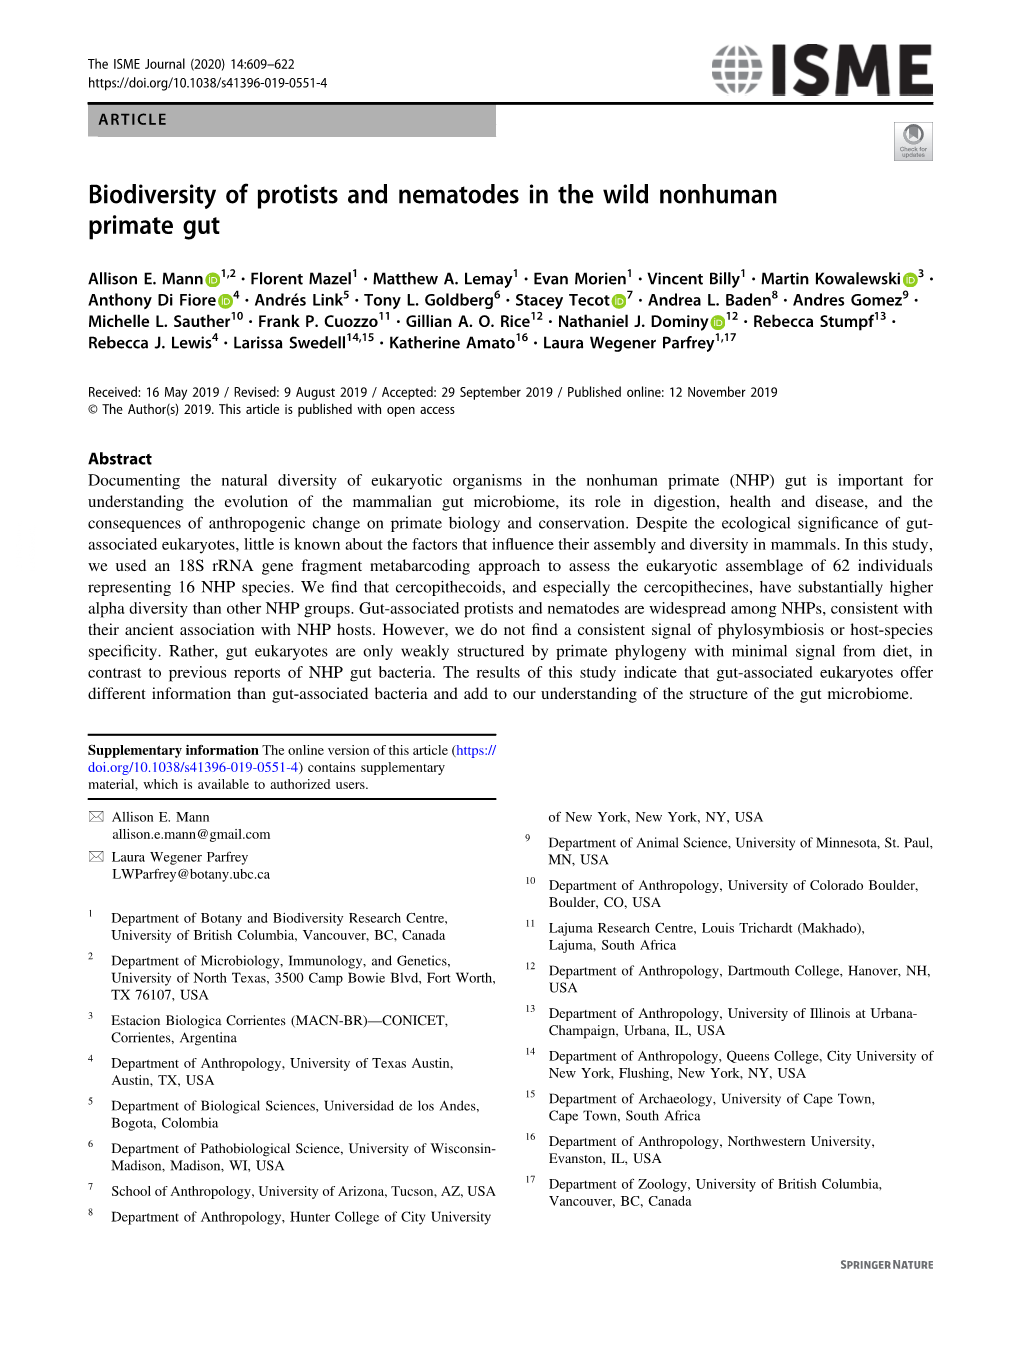 Biodiversity of Protists and Nematodes in the Wild Nonhuman Primate Gut